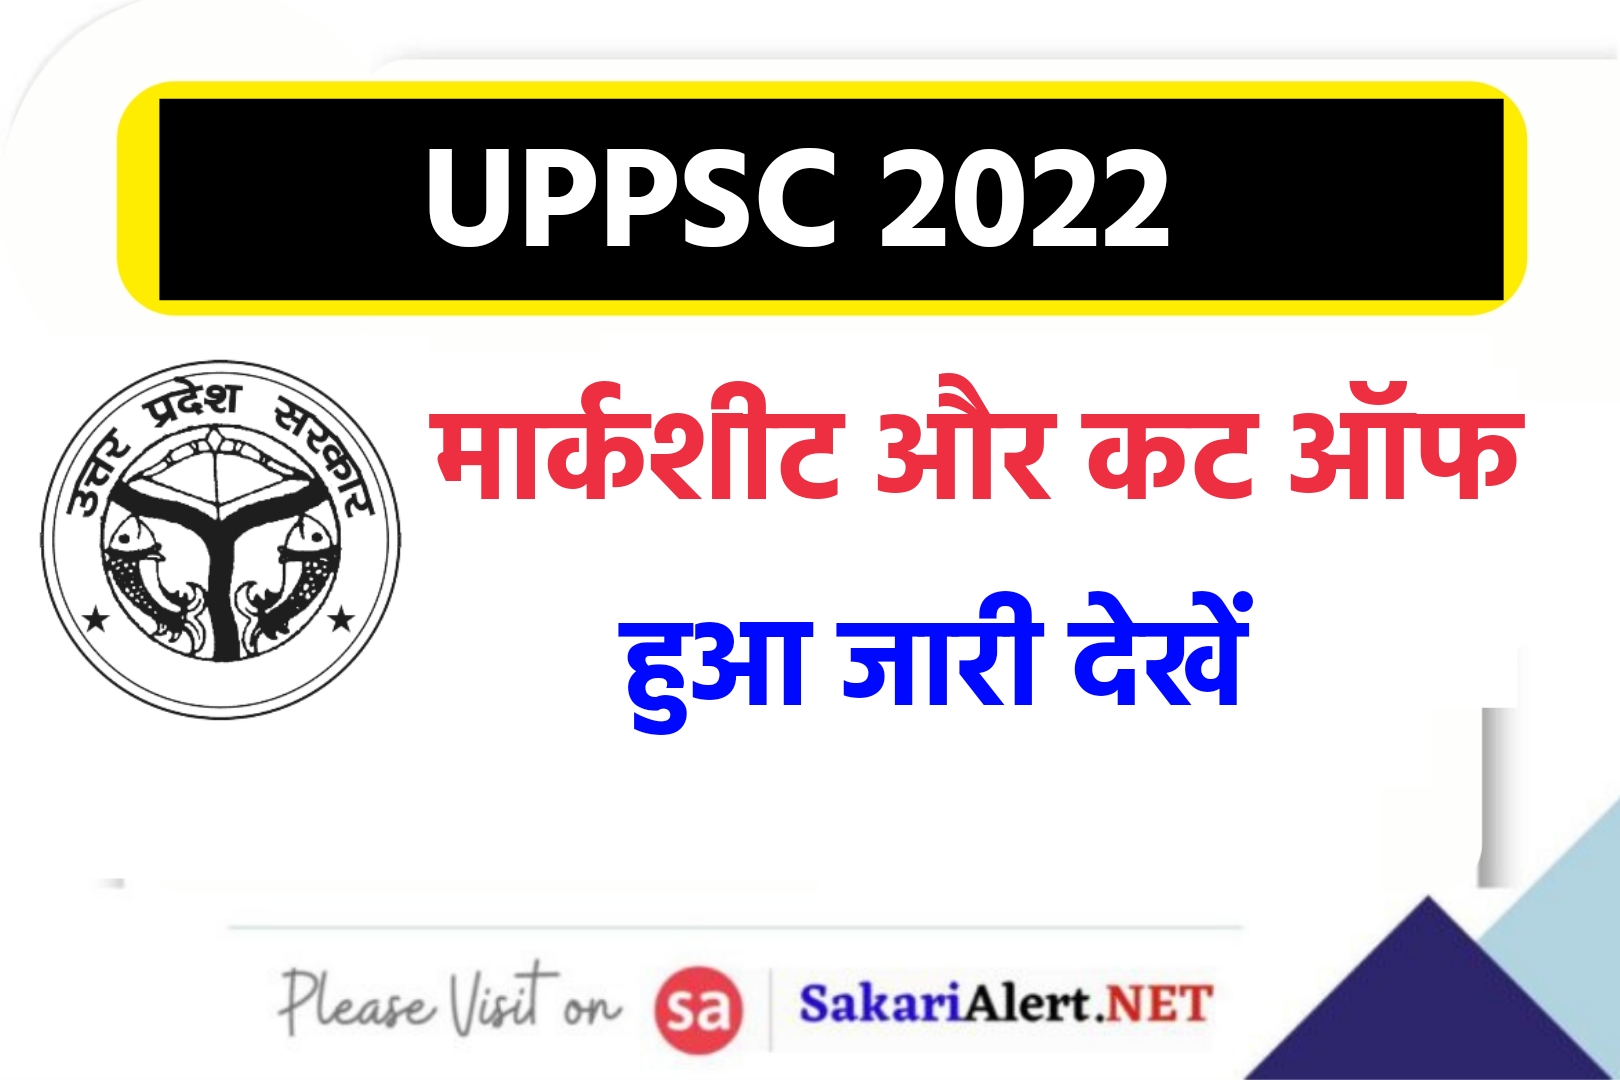 UPPSC 2022 Marks and Cut off 2023 | यूपी लोक सेवा आयोग परीक्षा कट ऑफ